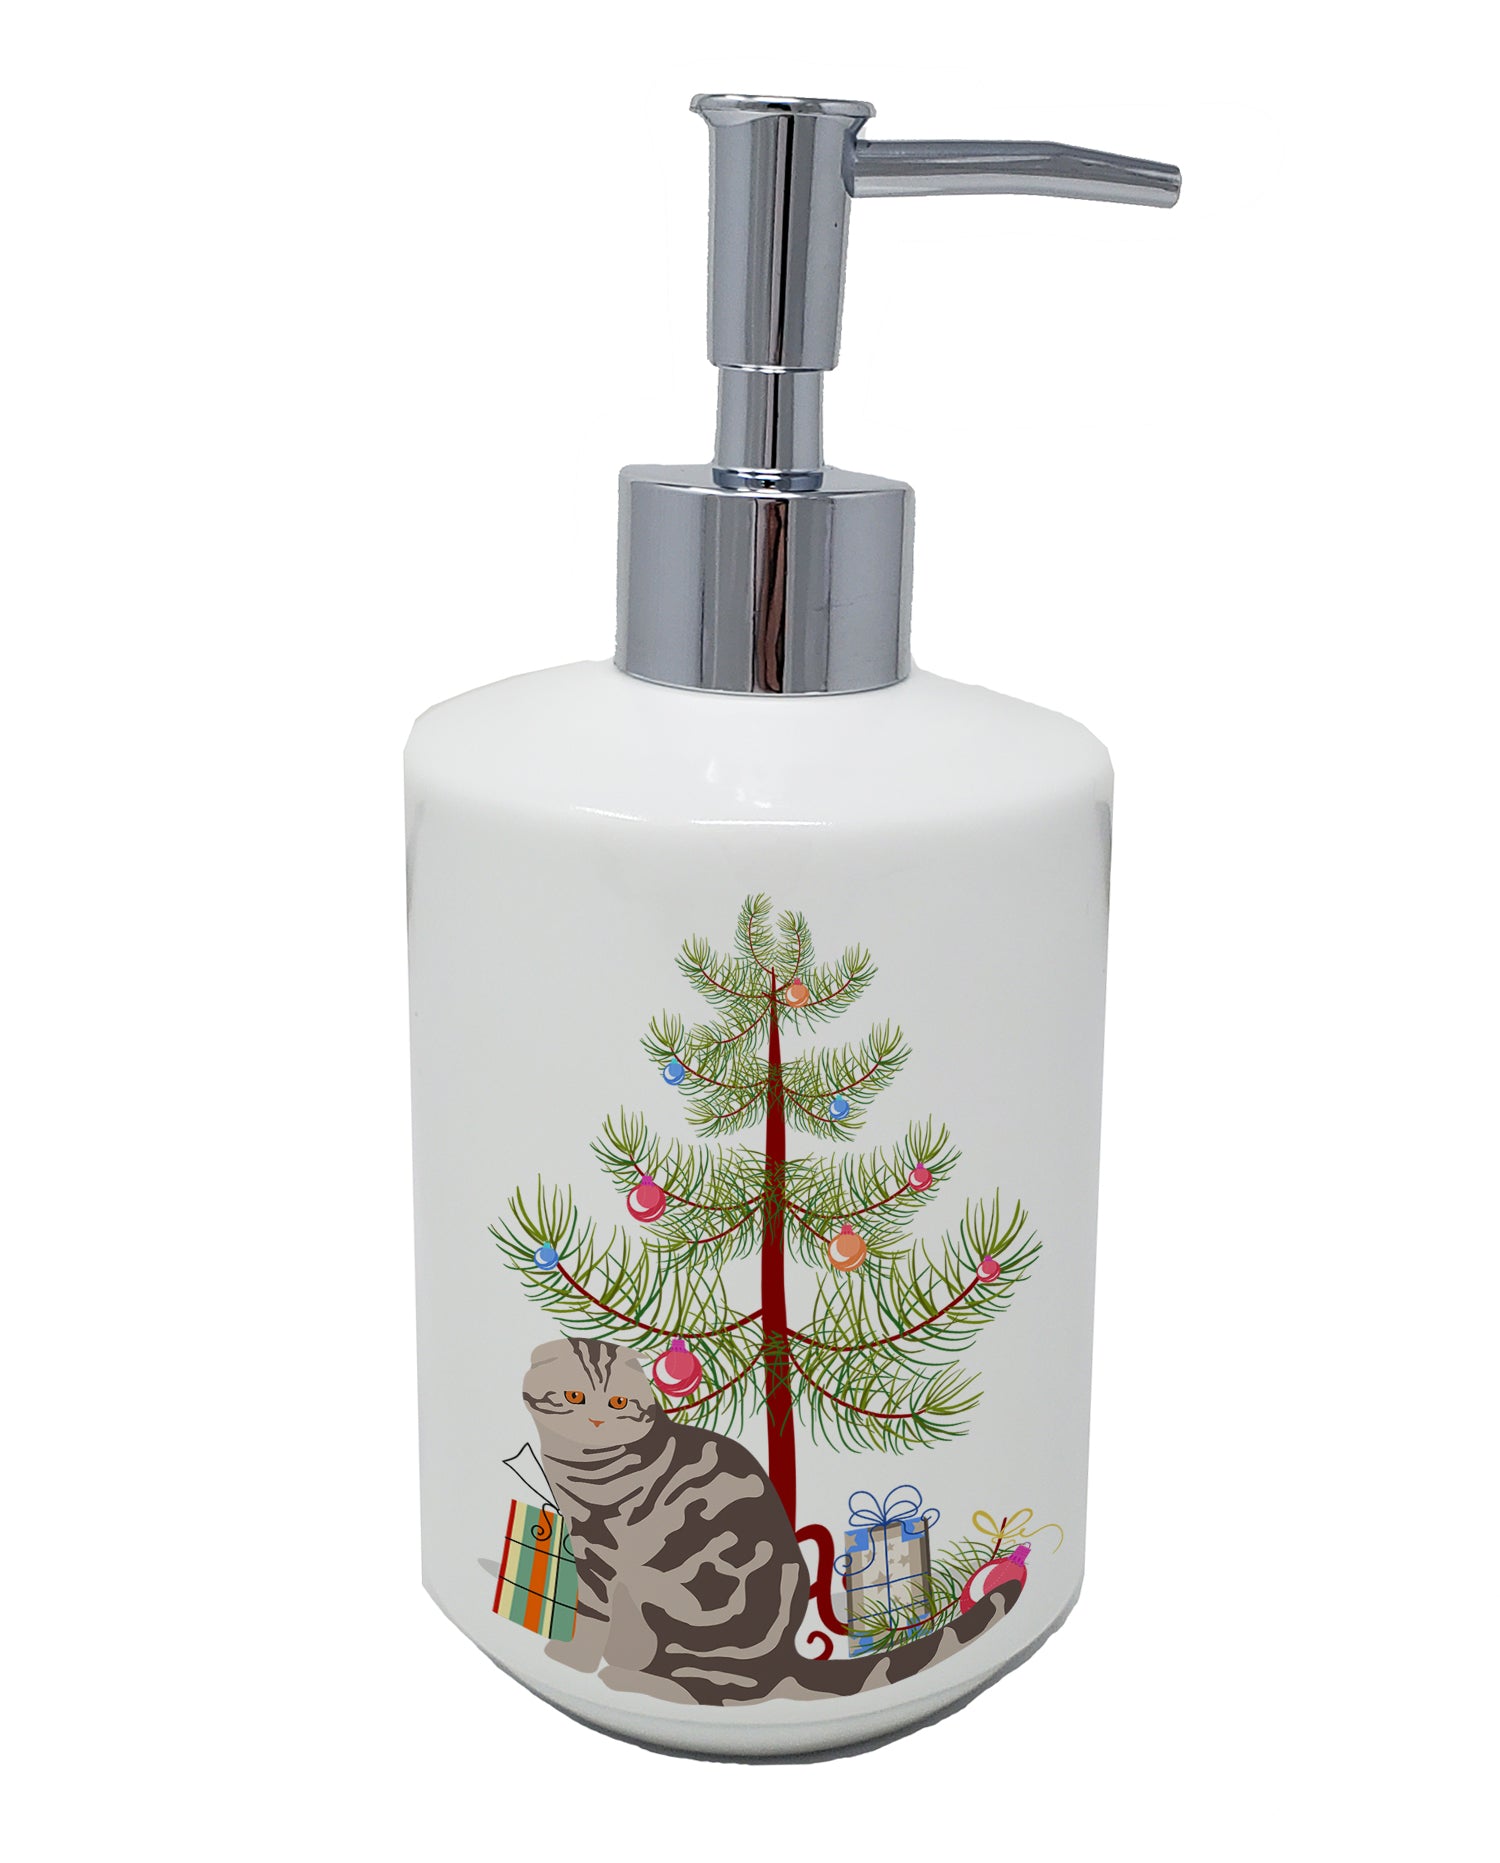 Buy this Foldex Exotic Fold Cat Merry Christmas Ceramic Soap Dispenser